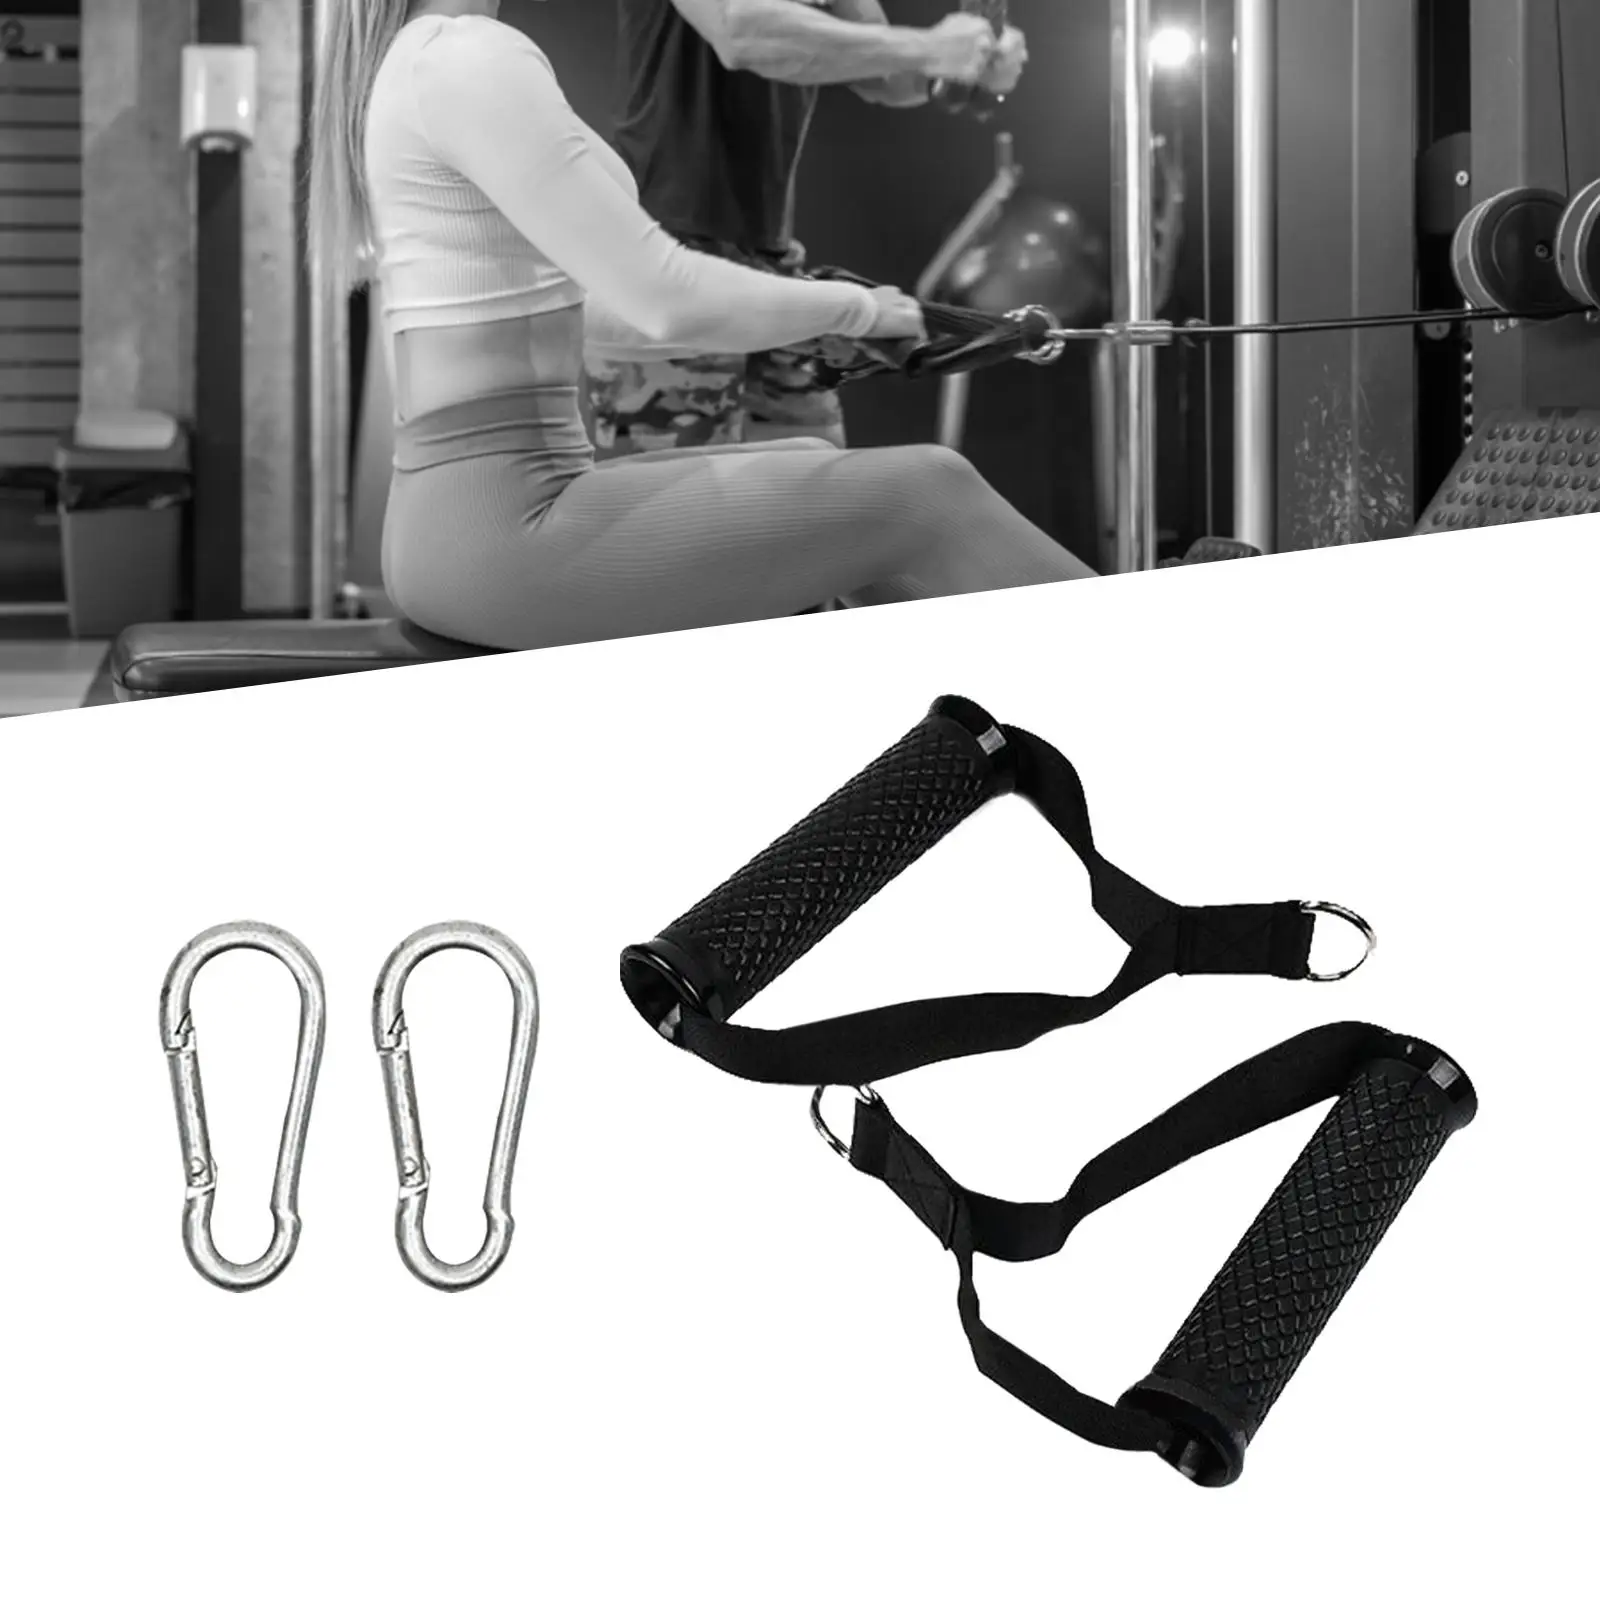 2x Universal Gym Handles Exercise Equipment Heavy Duty Gym Accessory LAT Row Bar